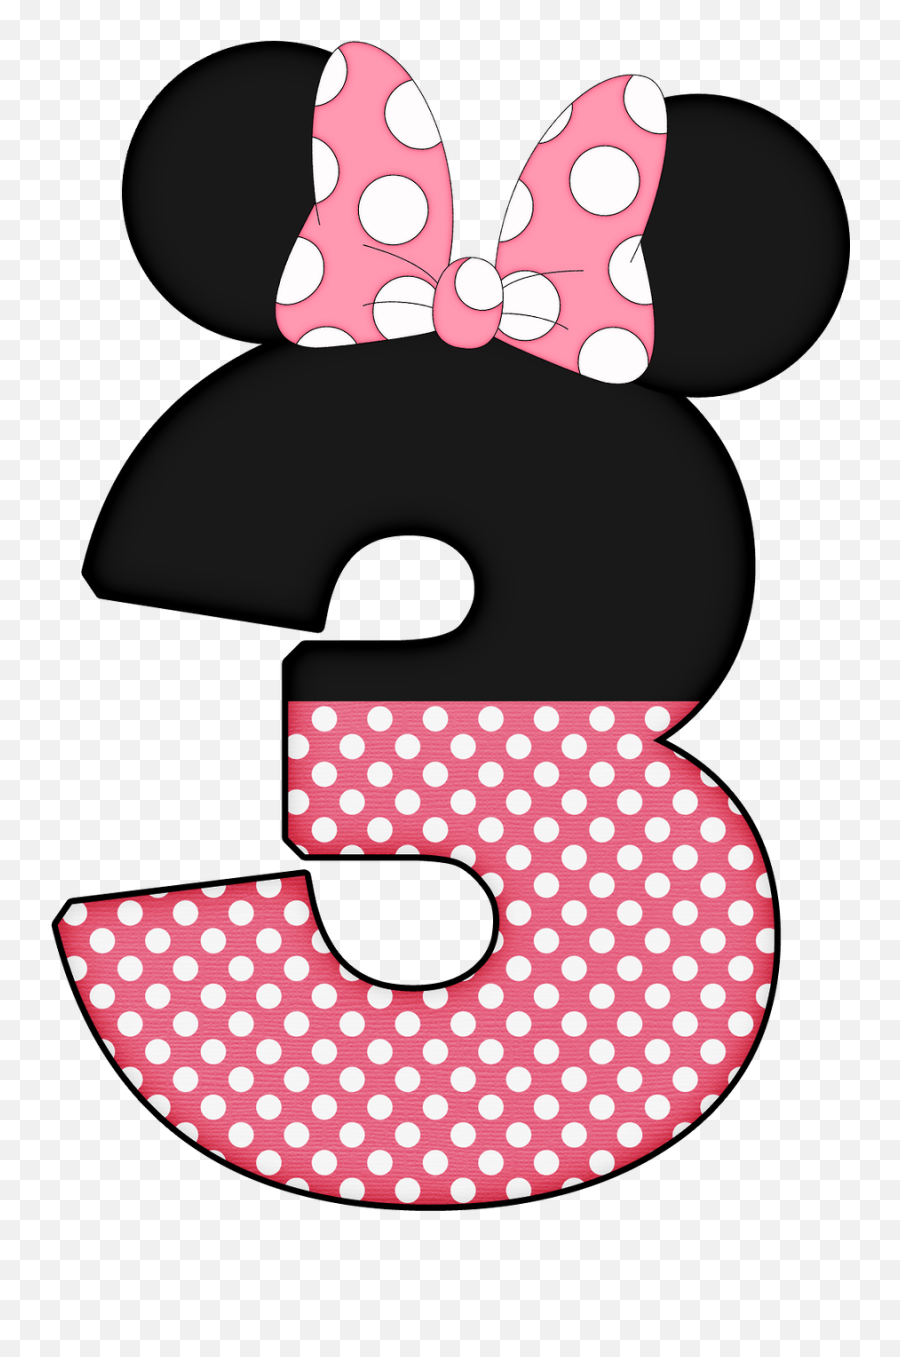 Mickey E Minnie - Siratinhafelizalpha 30png Minus 3 Minnie Mouse Png,Minnie Mouse Png Images